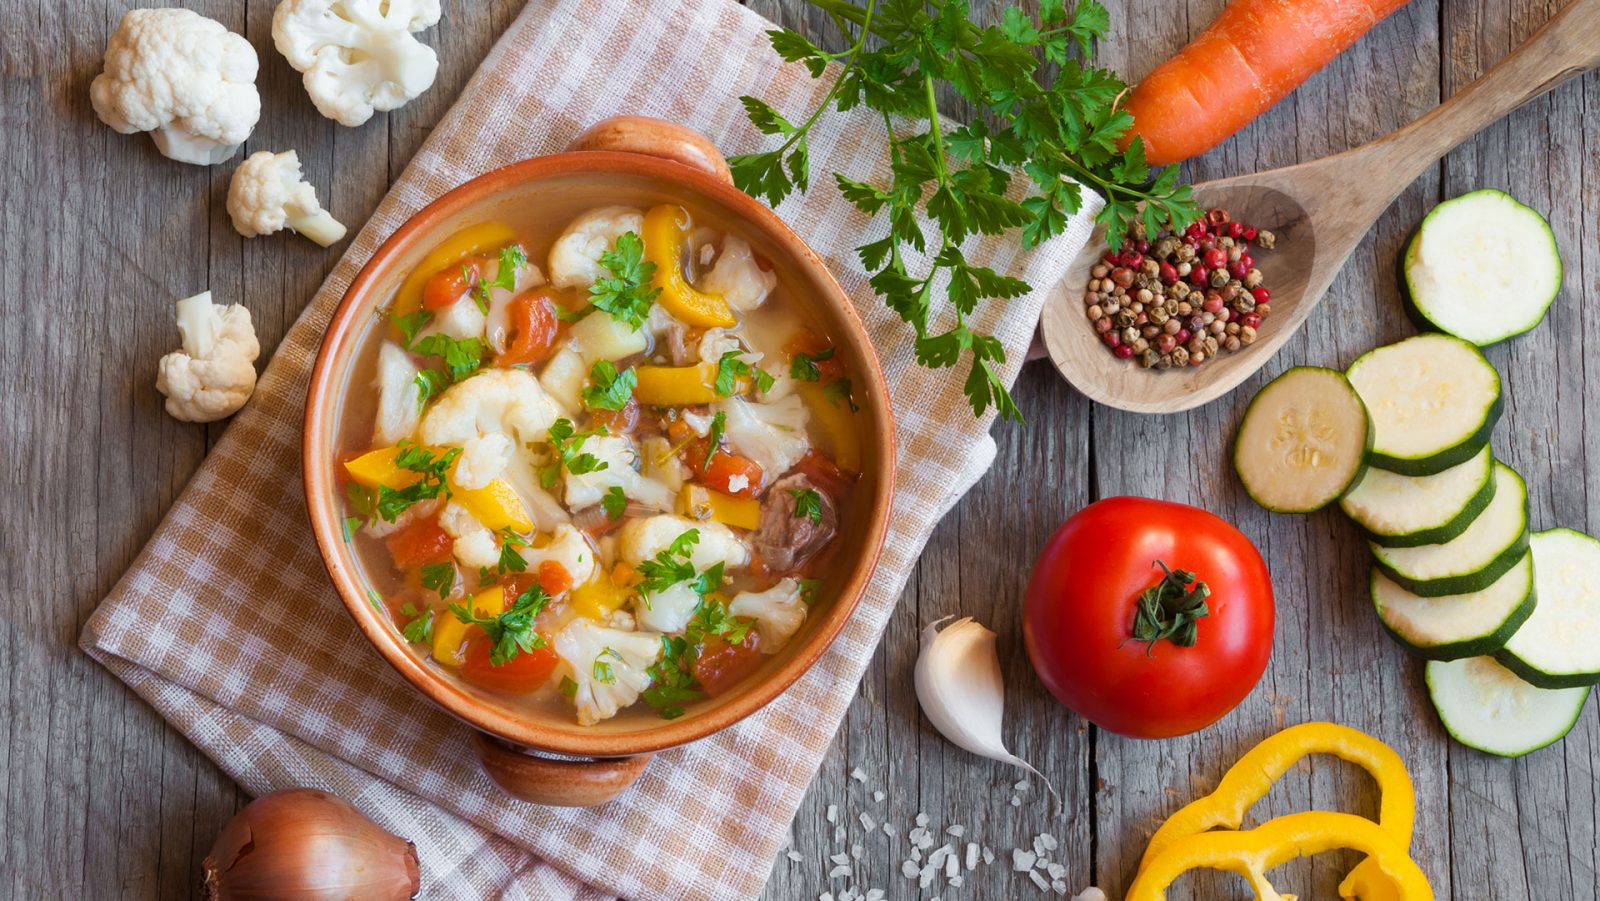 Dieta da sopa milagrosa funciona de verdade?